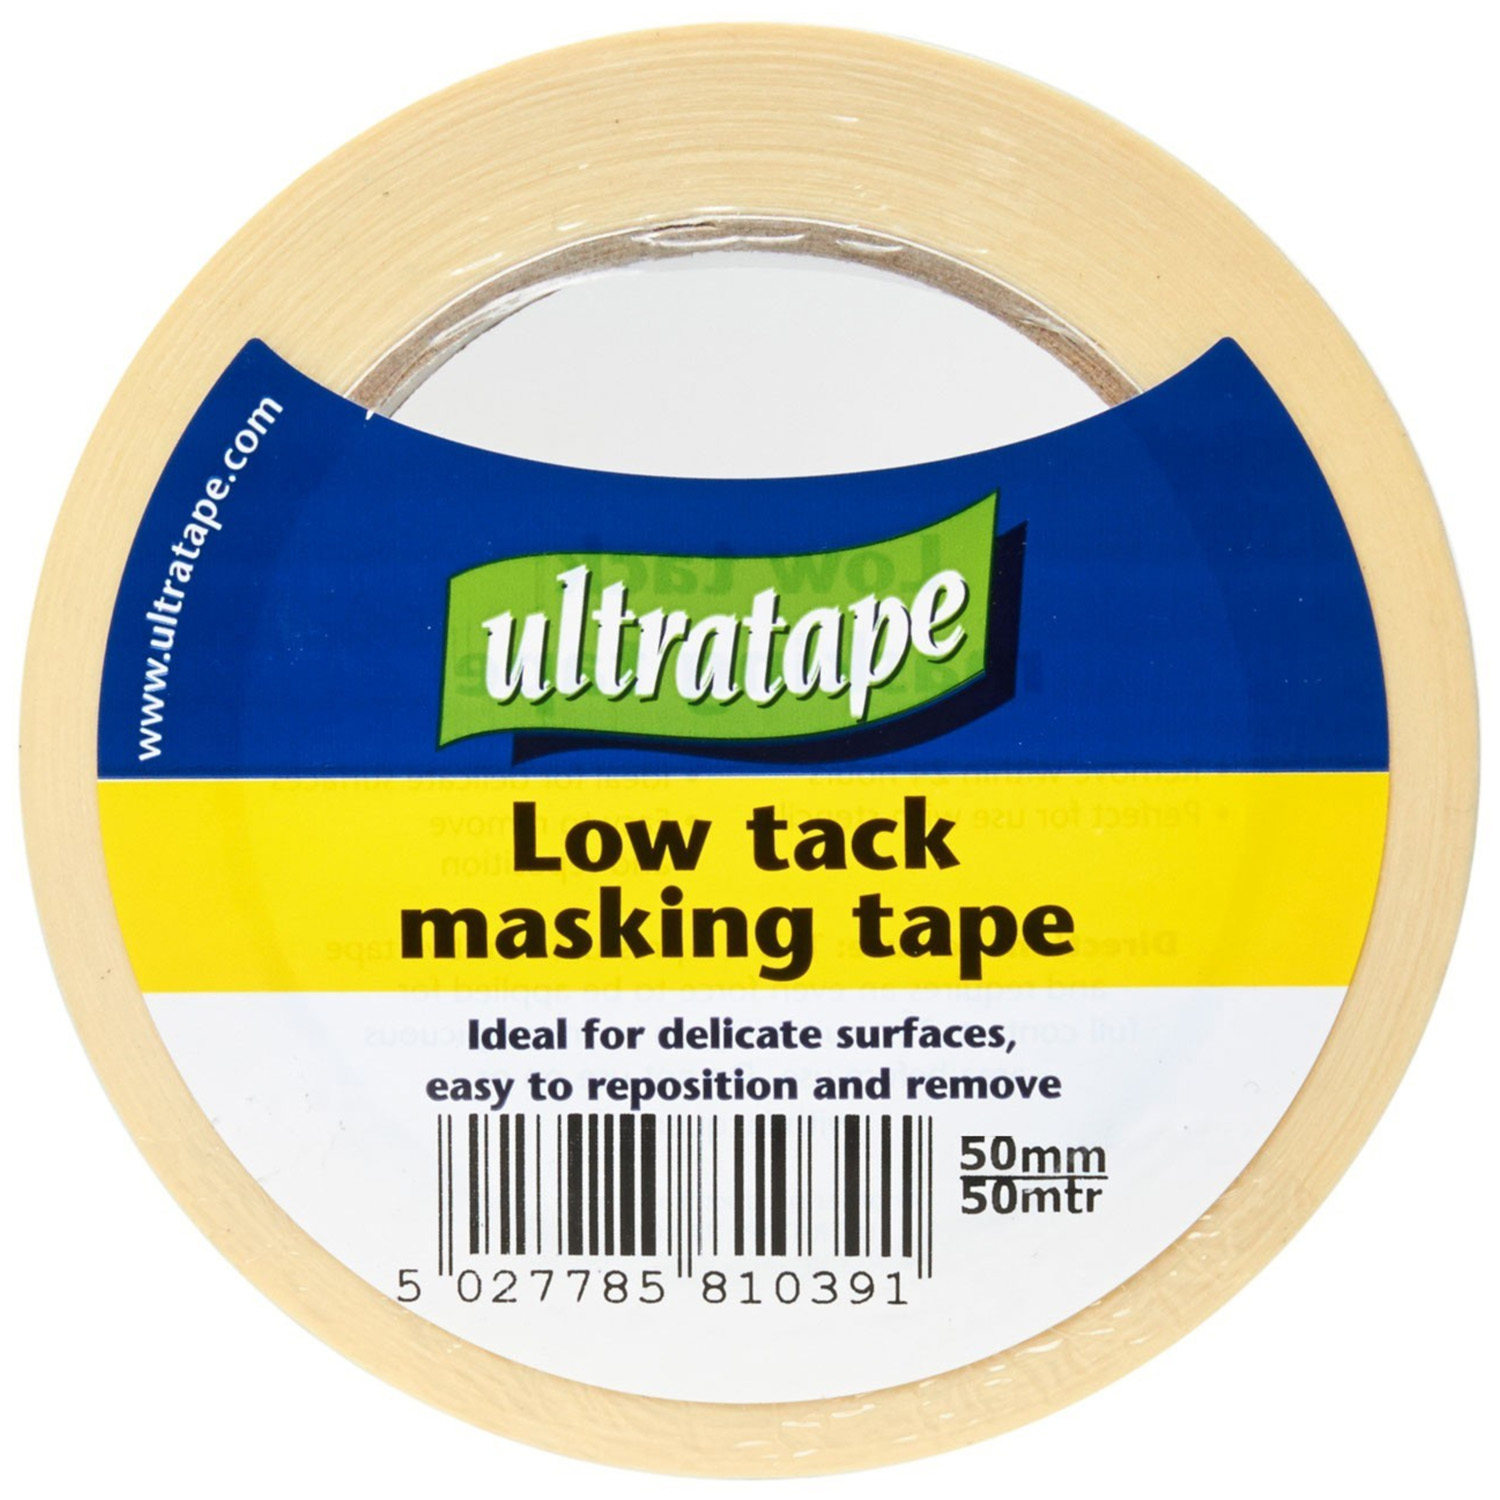 Ultratape 50m x 50mm Low Tack Masking Tape Image